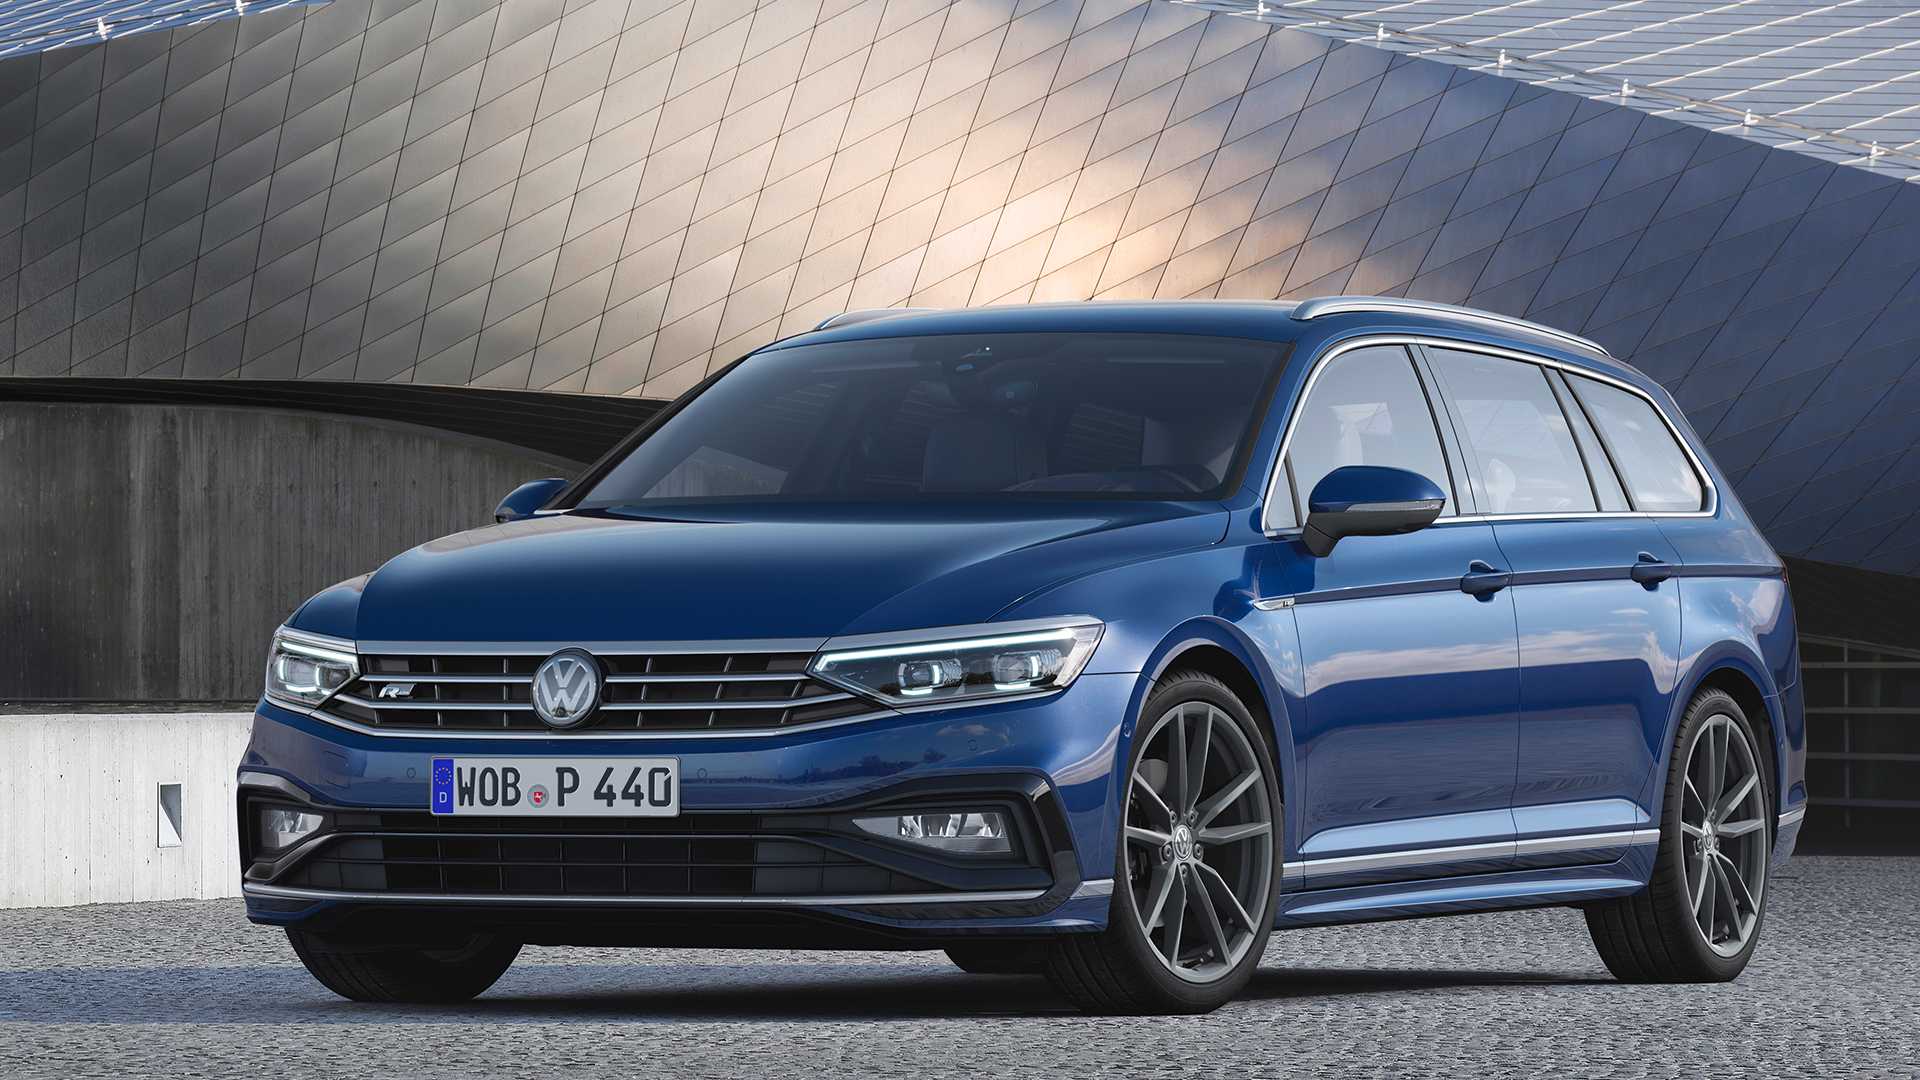 VW Passat Euro Version Arrives In Geneva With New Look